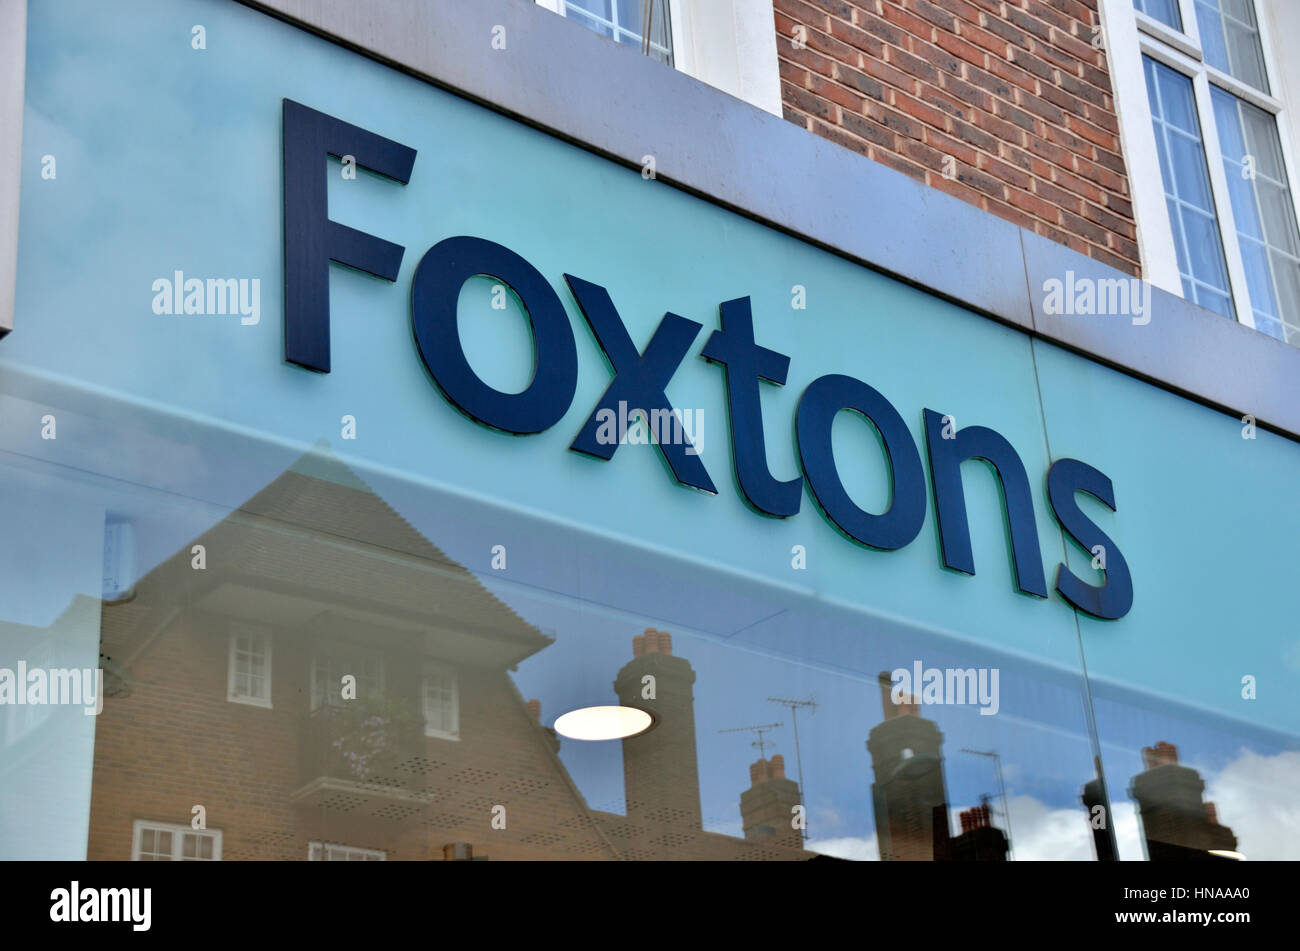 Foxtons estate agent in Golders Green, London, UK. Stock Photo